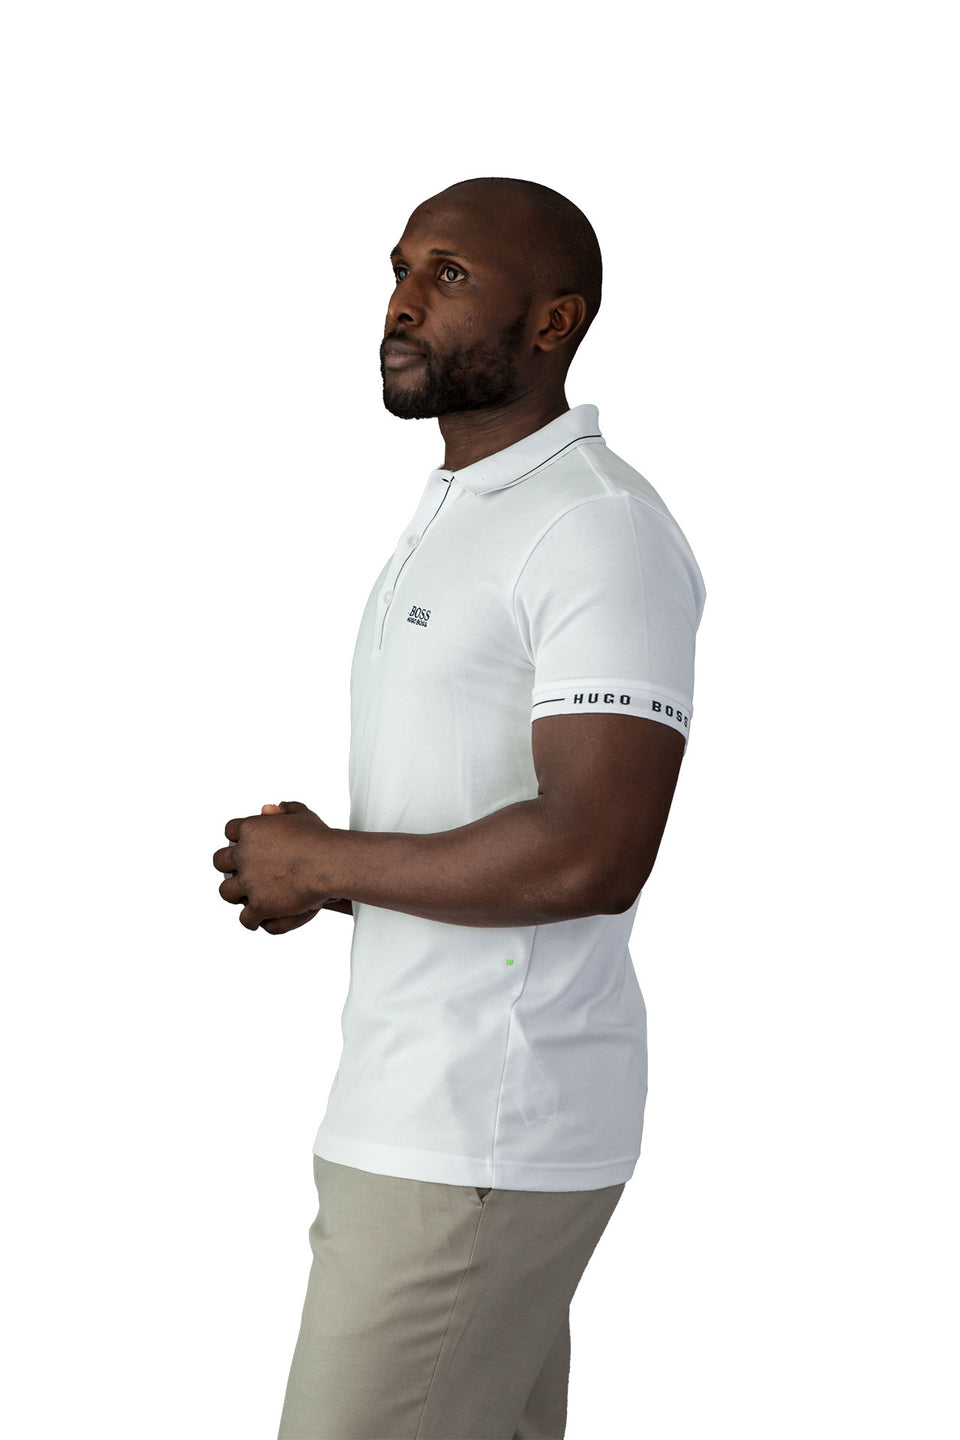 Hugo Boss Moisture Manager White Cotton Polo Shirt - Camden Connaught